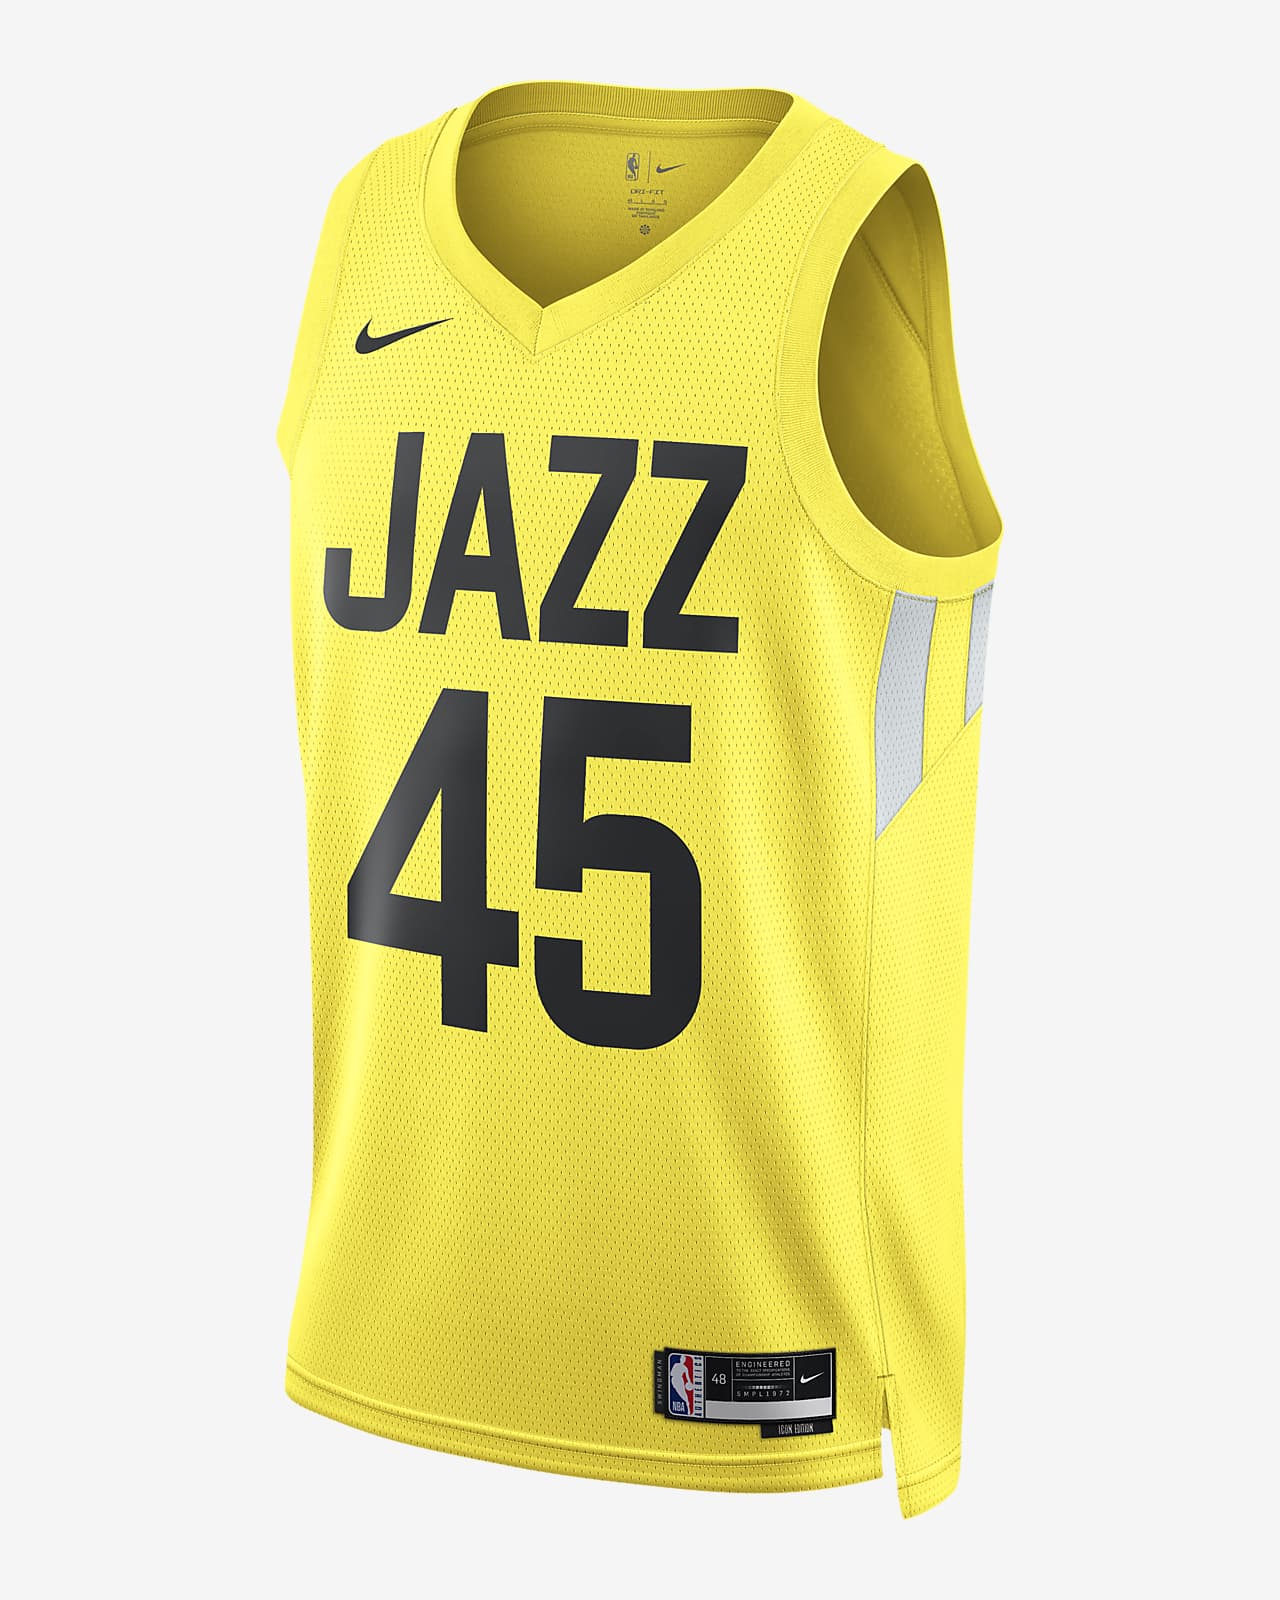 Jersey Nike Dri-FIT NBA Swingman Jazz Icon Edition Nike.com